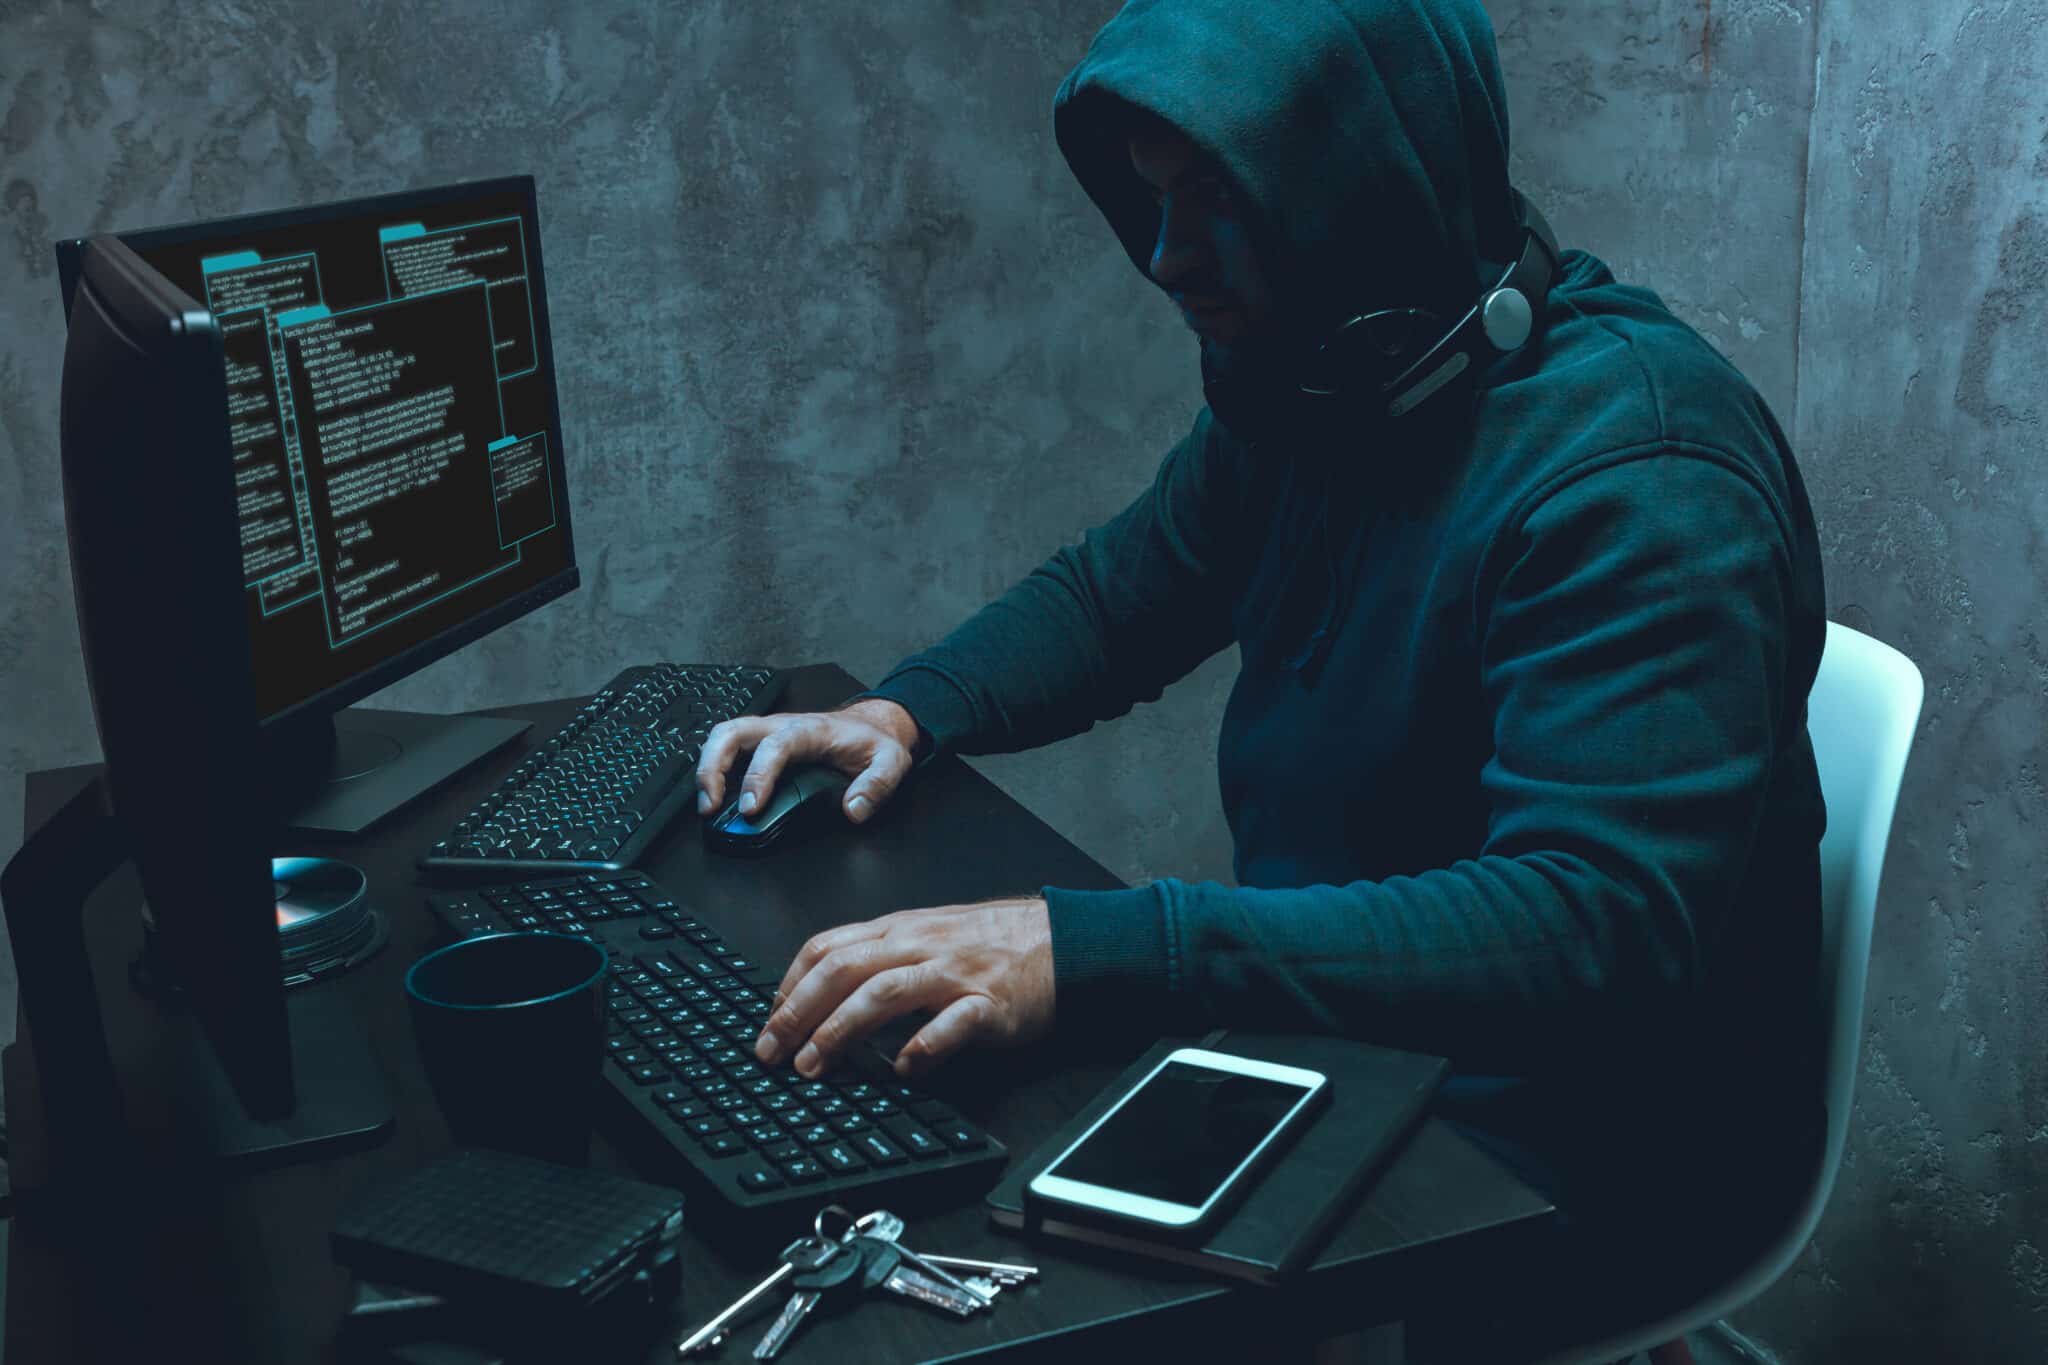 Hacker programmer using computer in dark room, close up